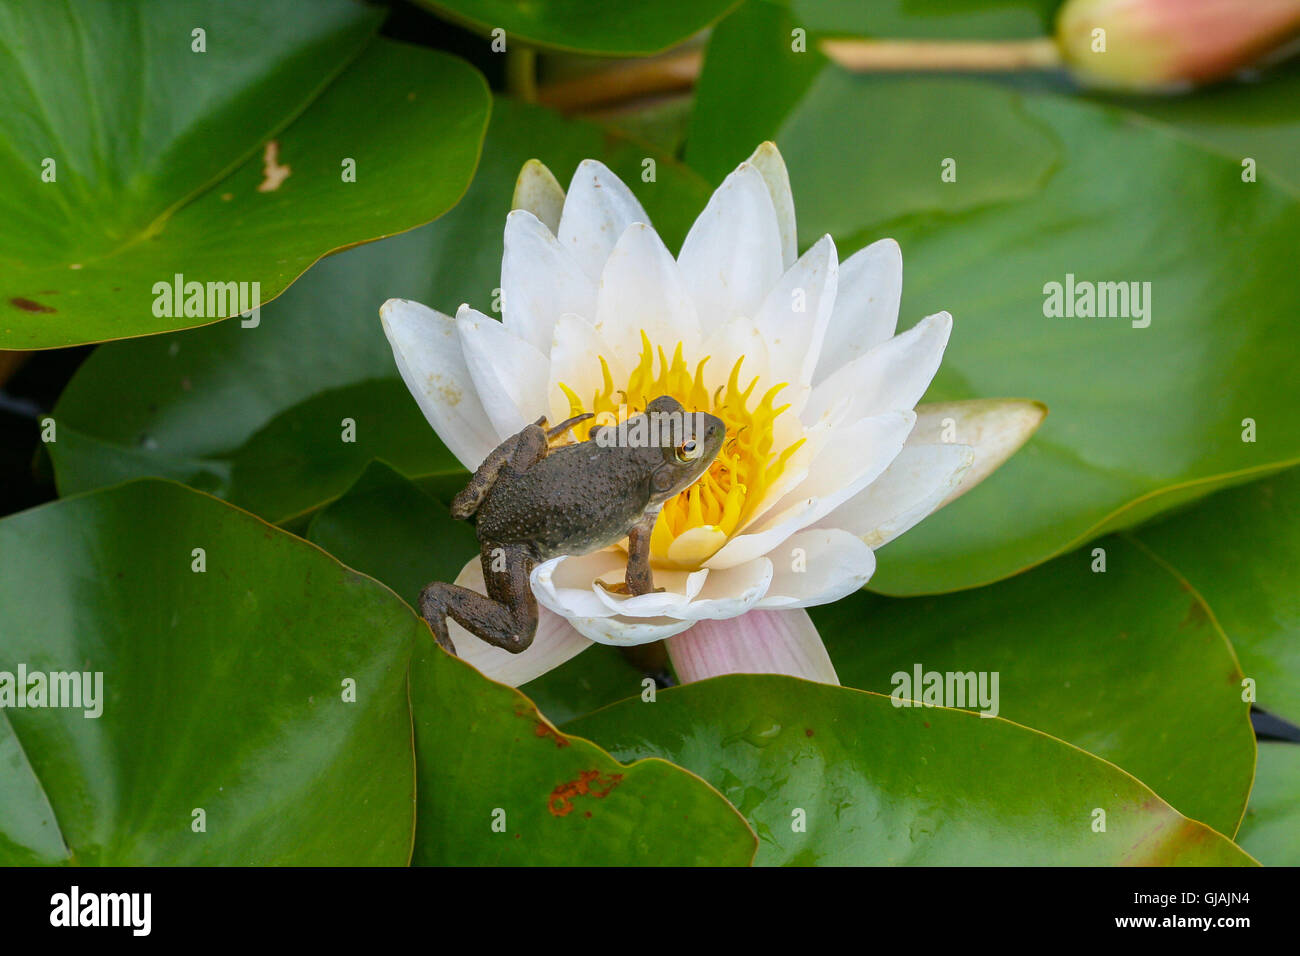 A young American Bullfrog (Rana catesbeiana / Lithobates catesbeiana) climbing onto a water lily flower (Nymphaea odorata) Stock Photo